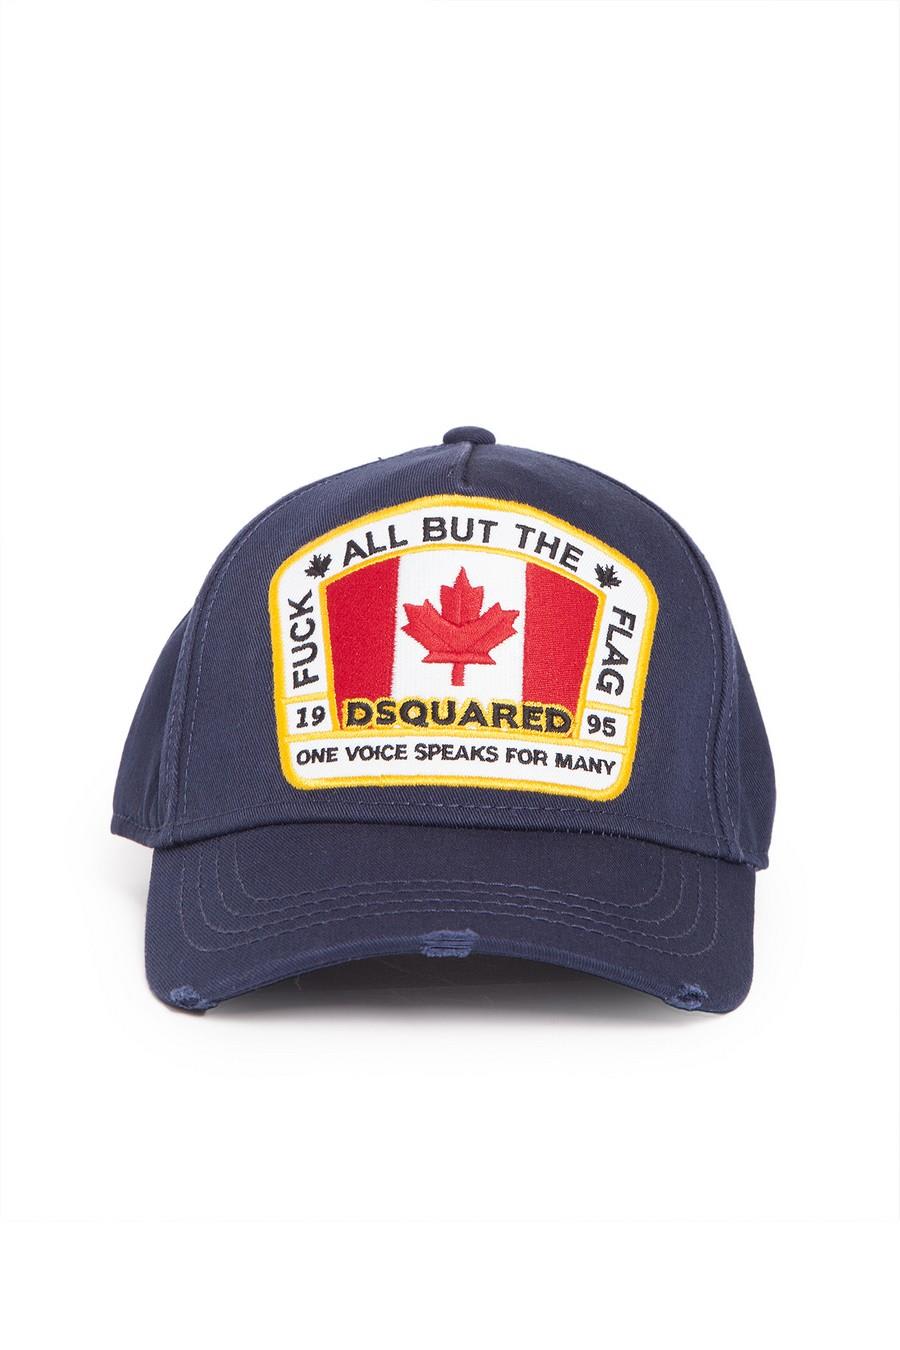 navy dsquared cap